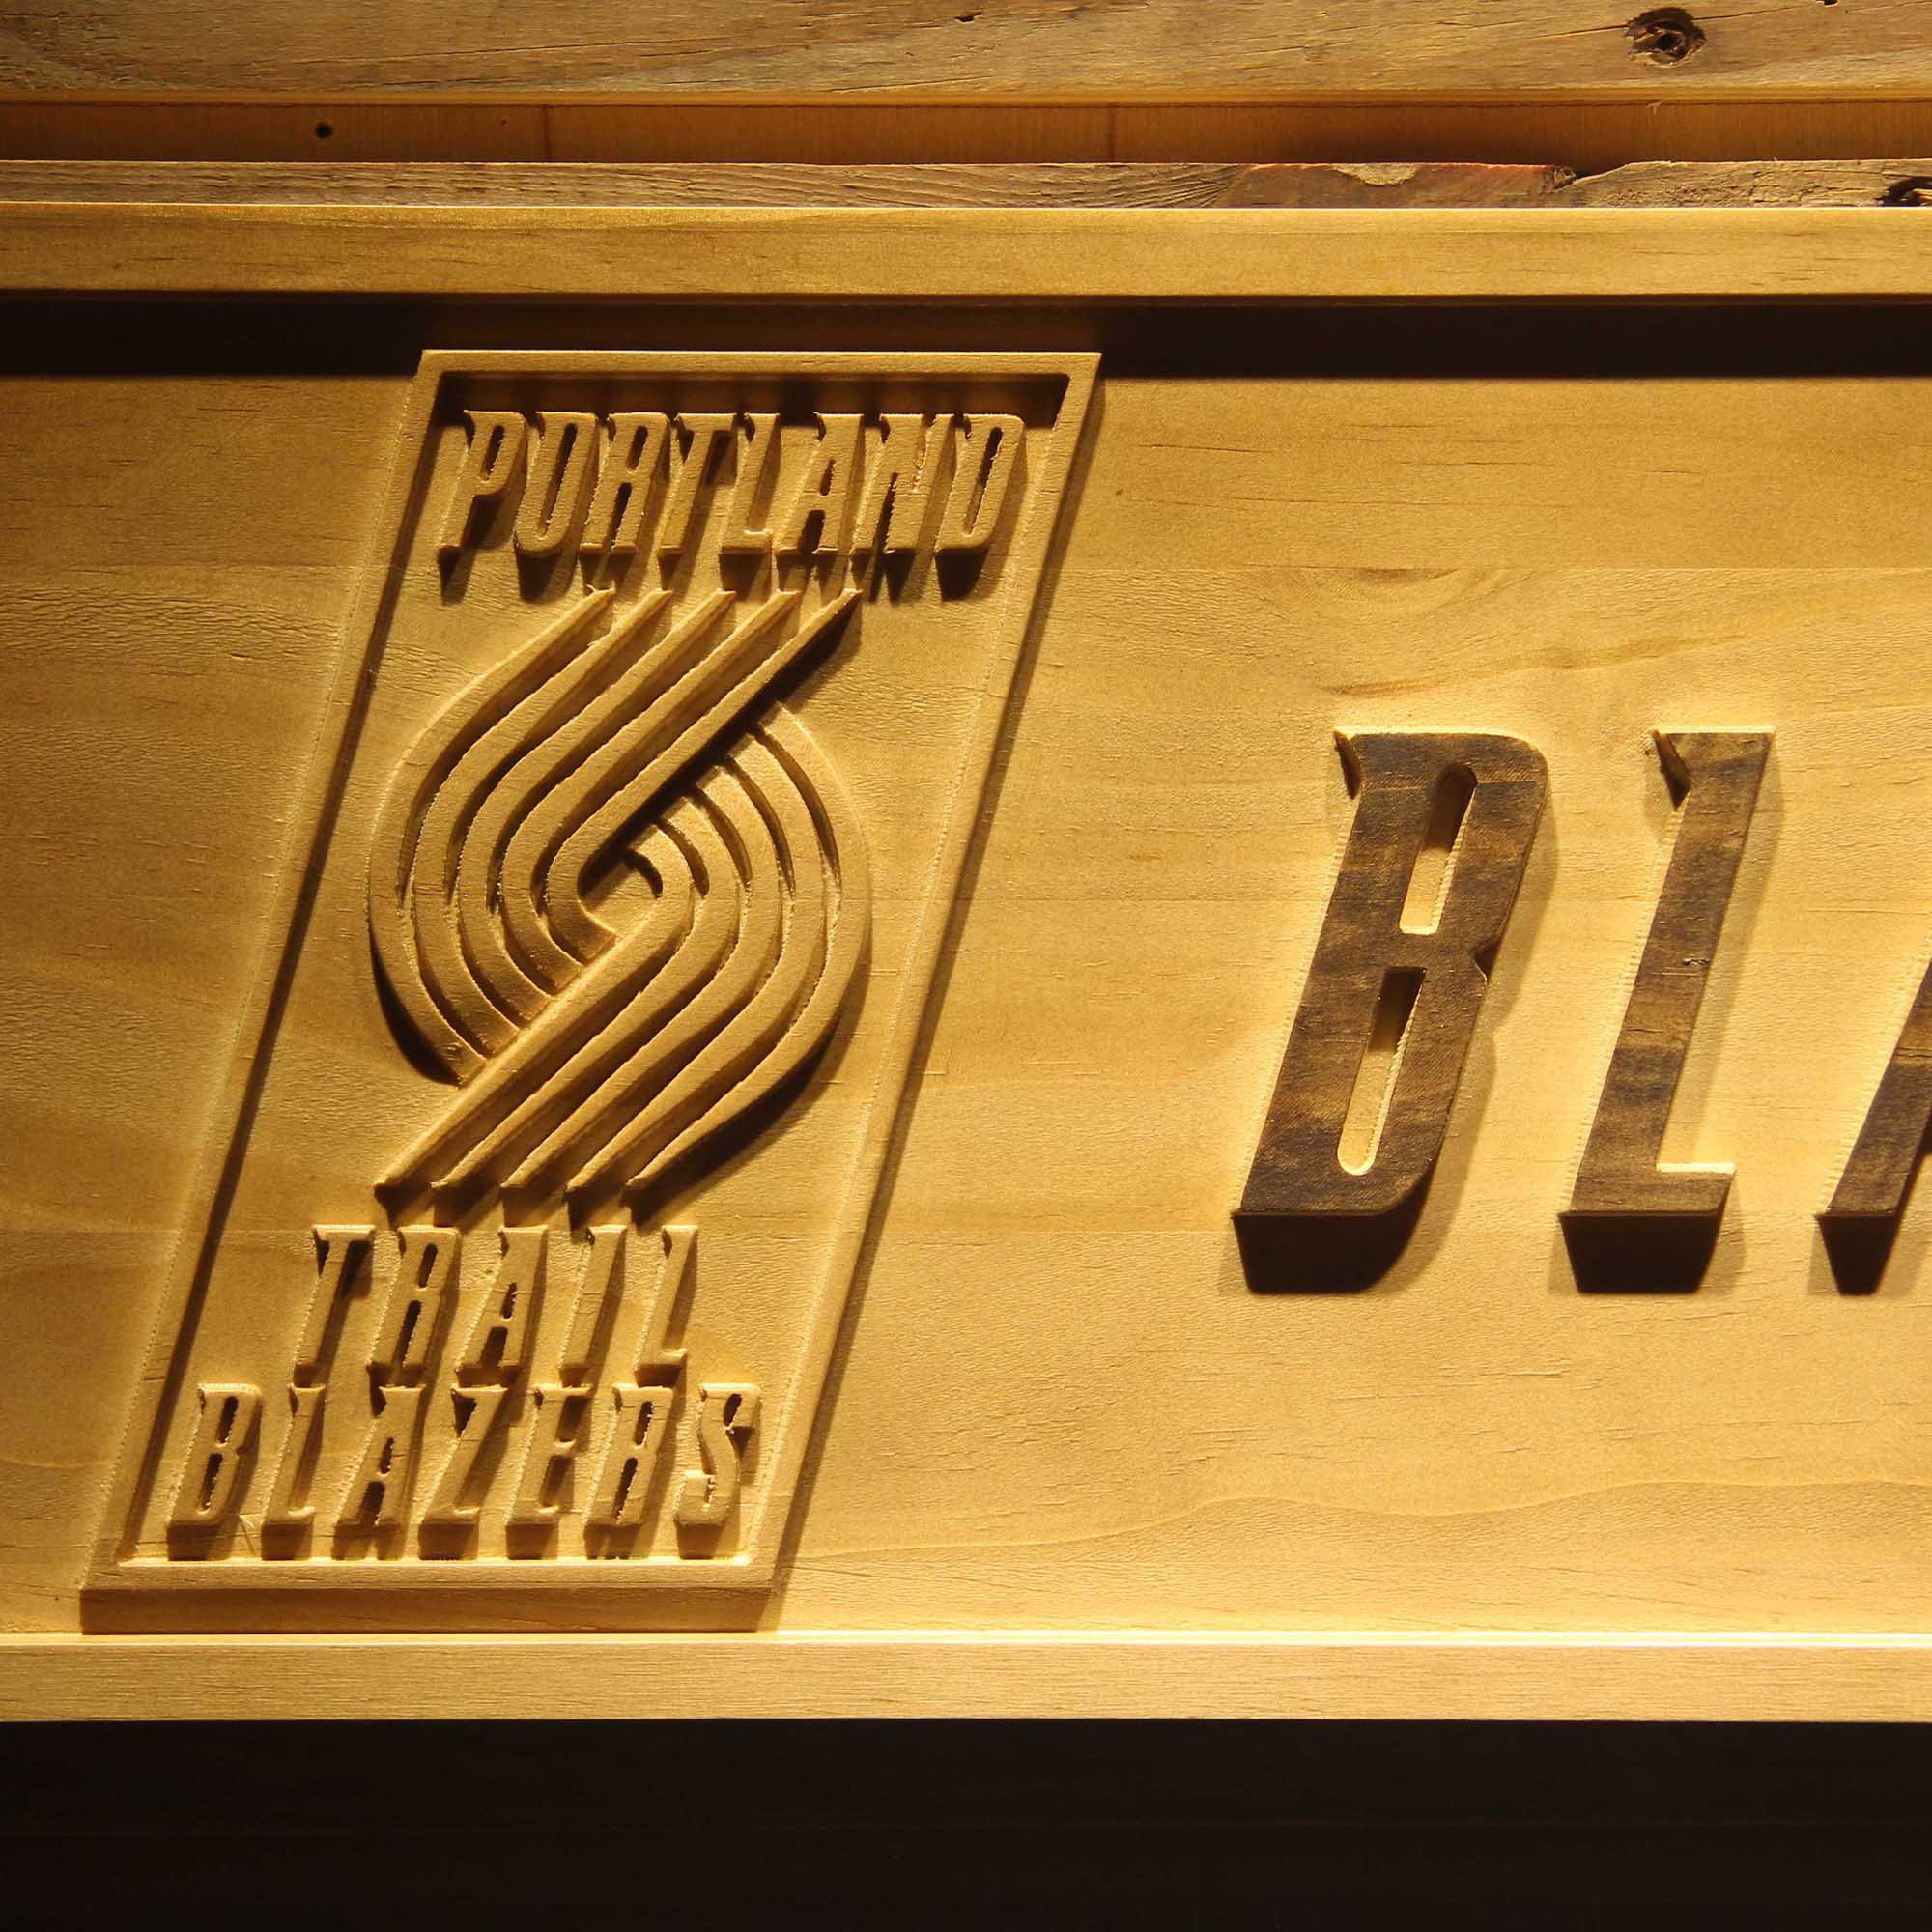 Portland Trail blazers Basketball Man Cave Sport 3D Wooden Engrave Sign